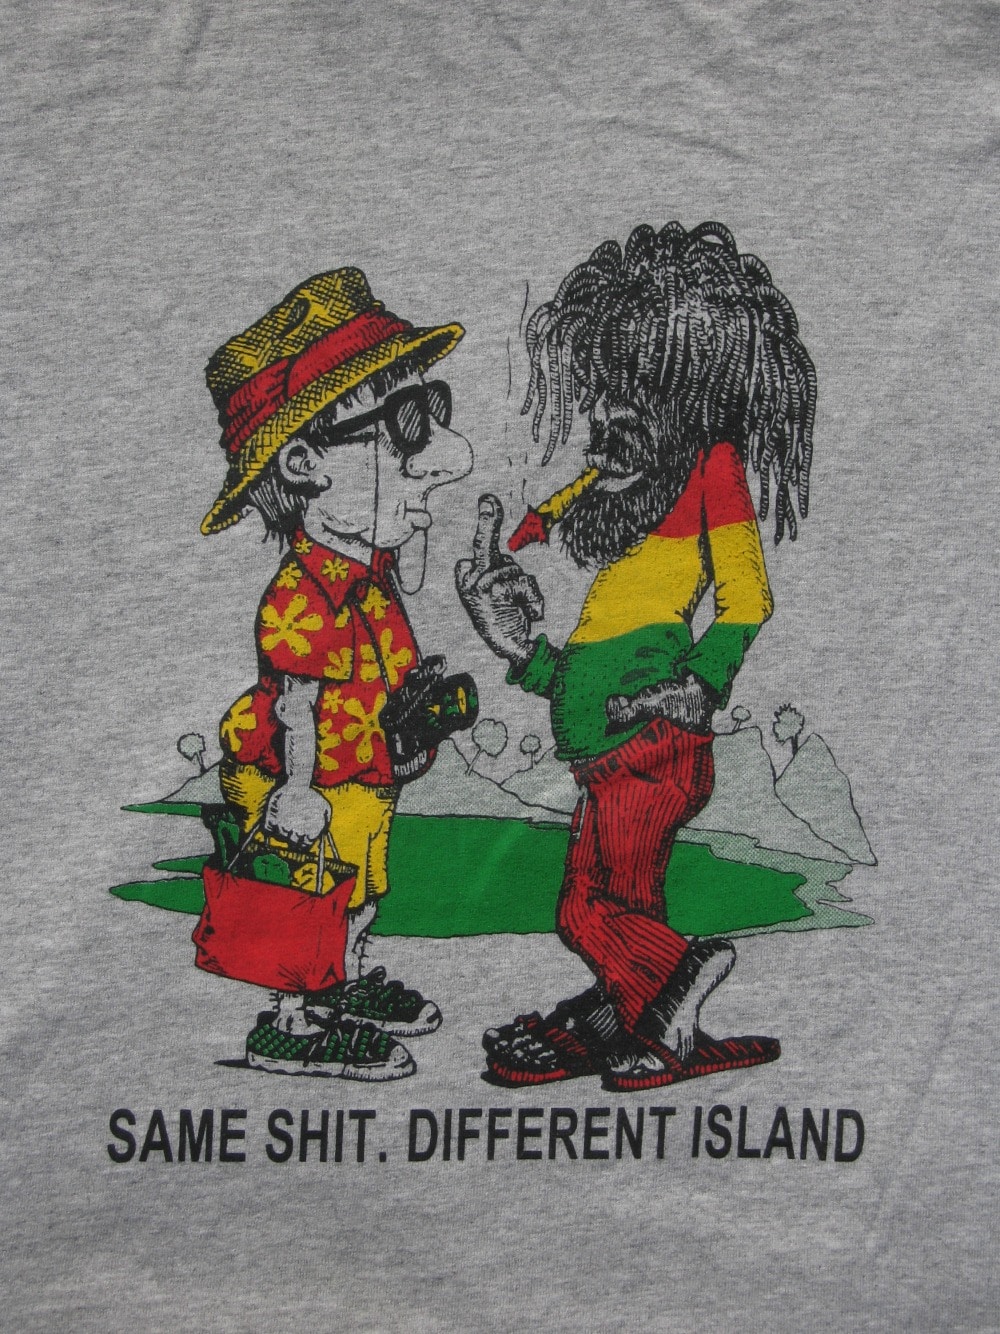 Baby Boomer Travel | Caribbean | Tee shirt humor - same shit - different island